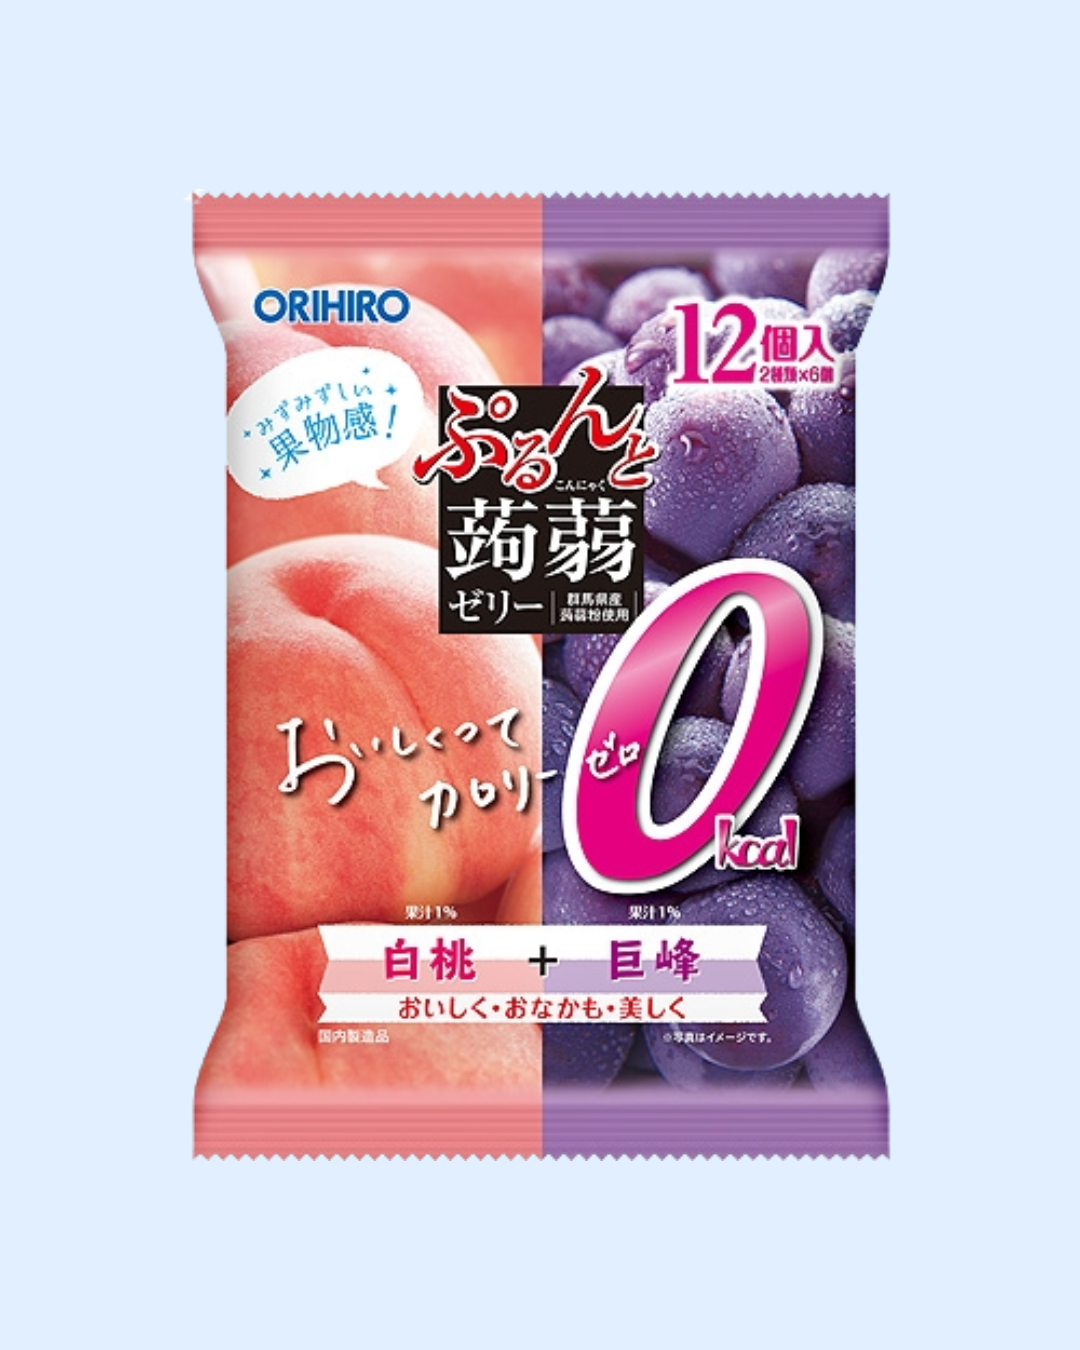 Orihiro 0kcal Peach & Grape Jelly